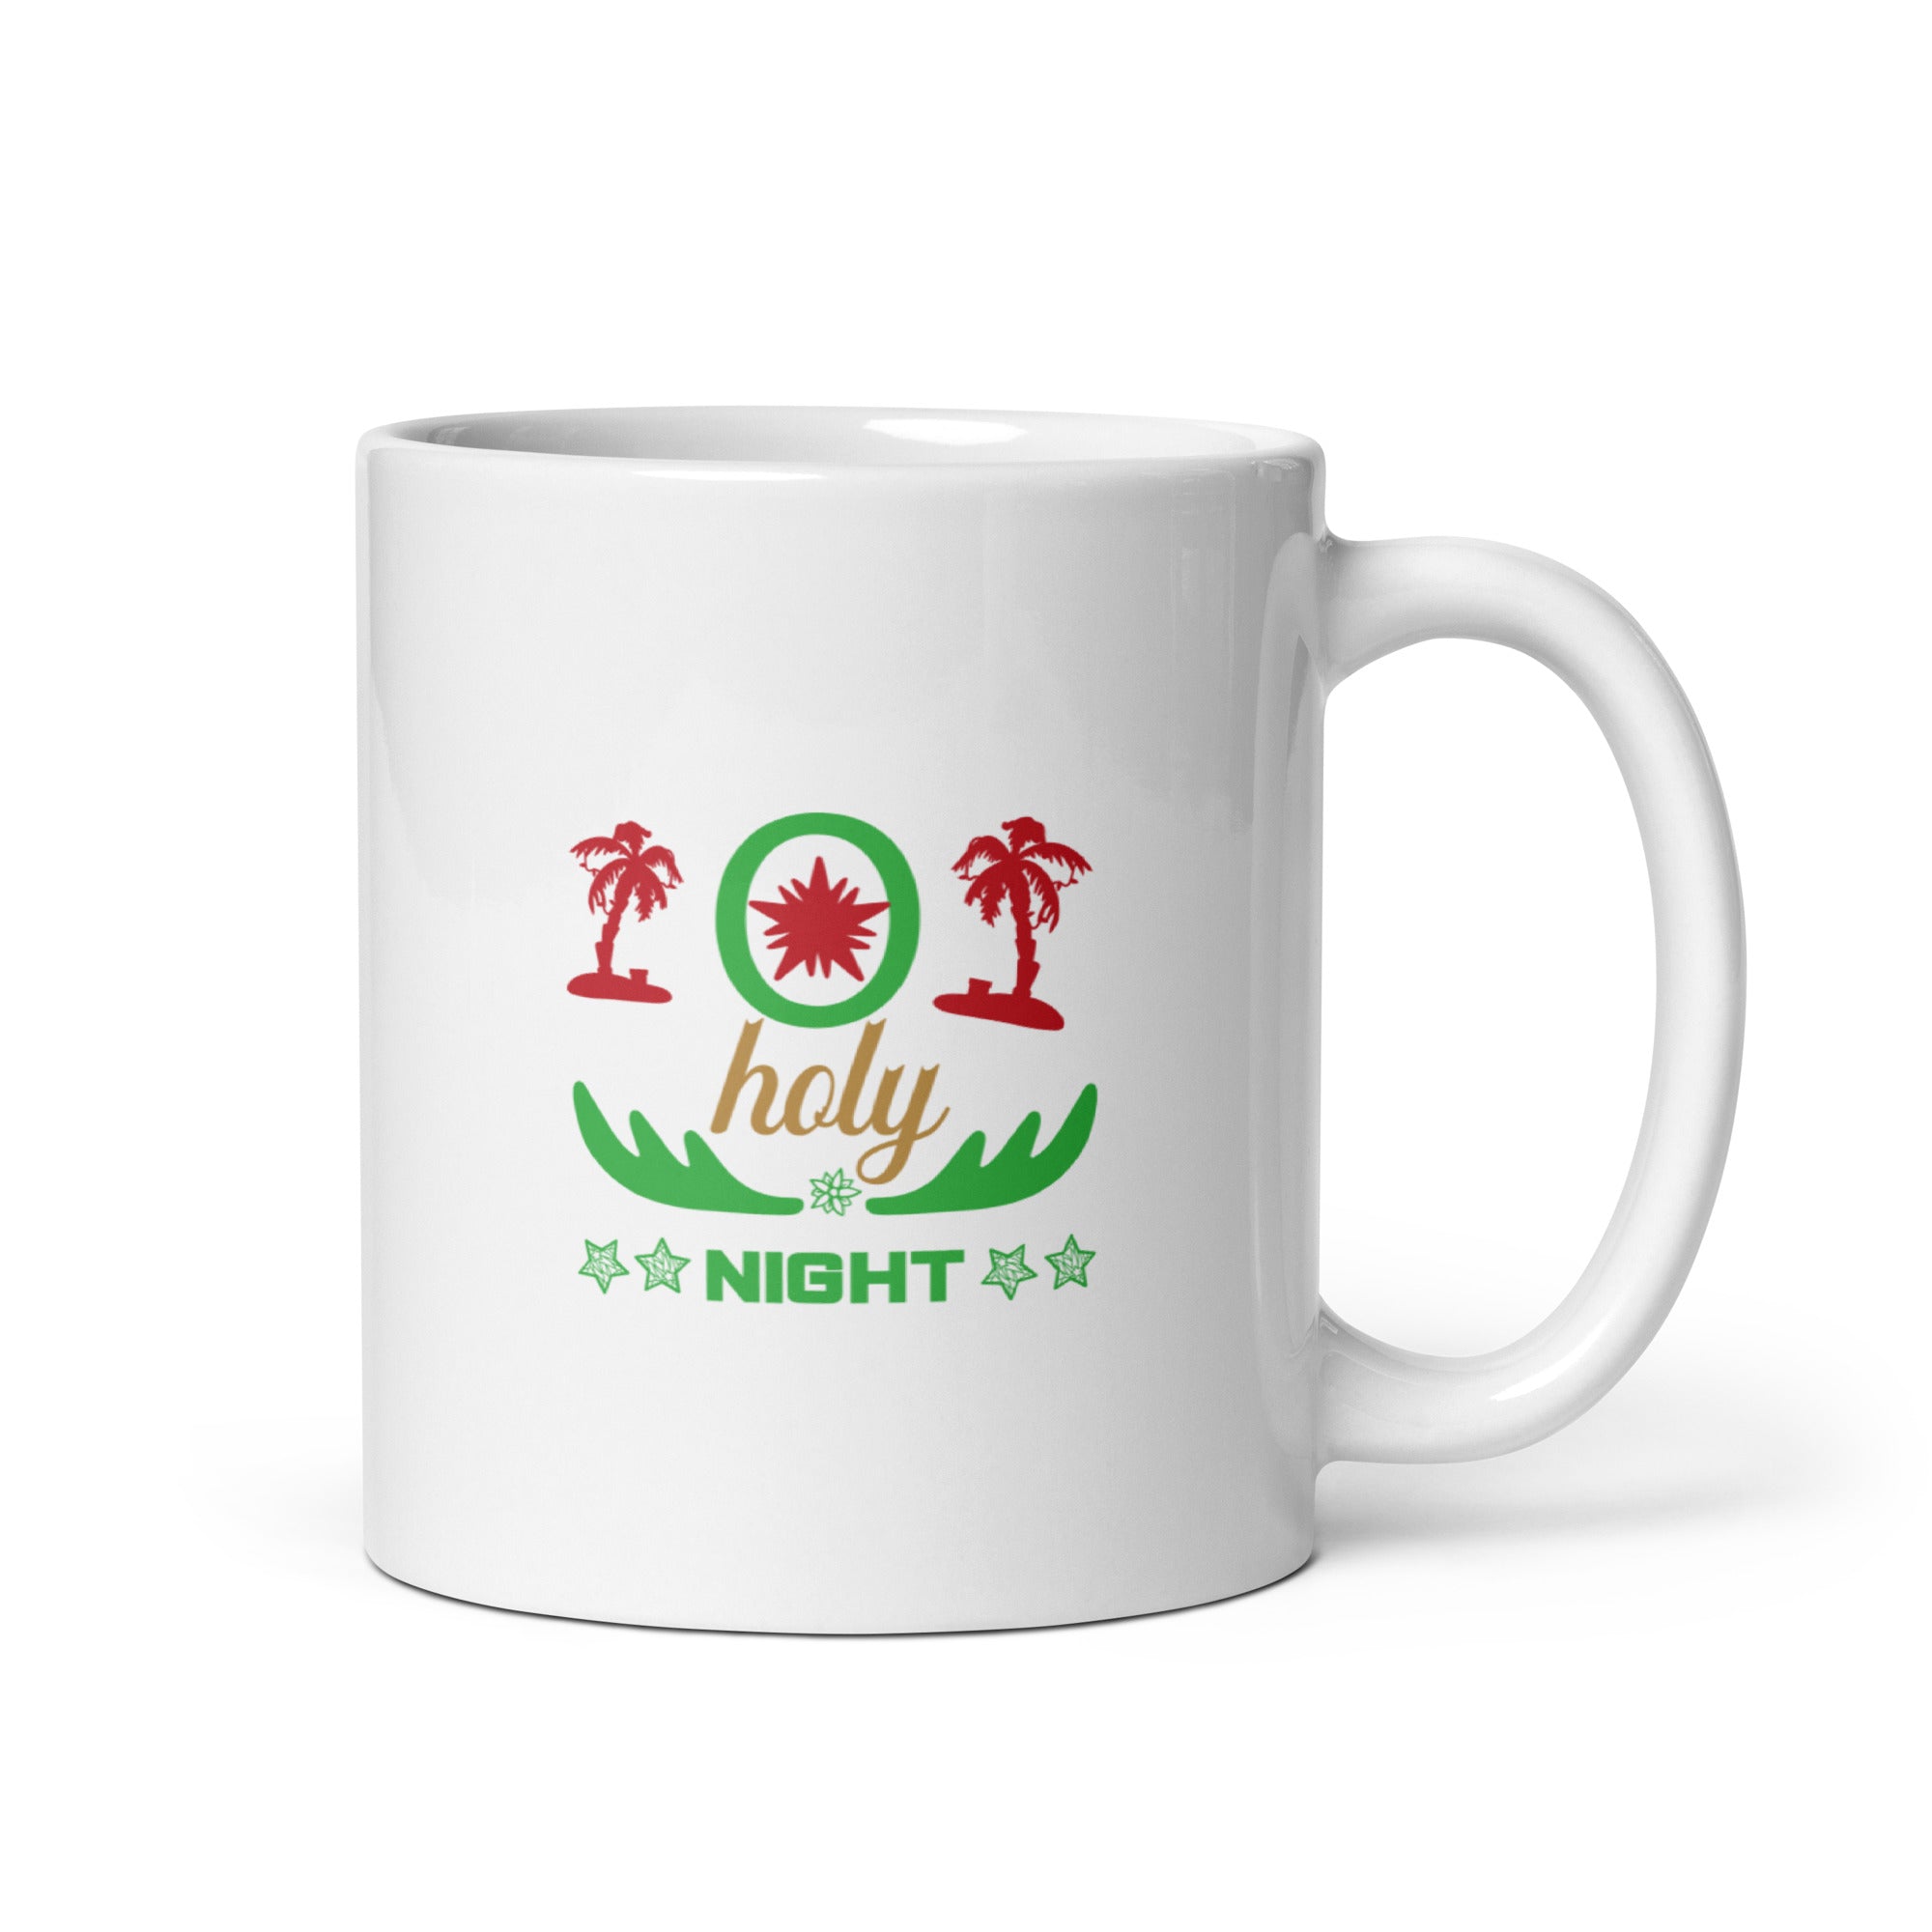 Holy Night - White glossy mug